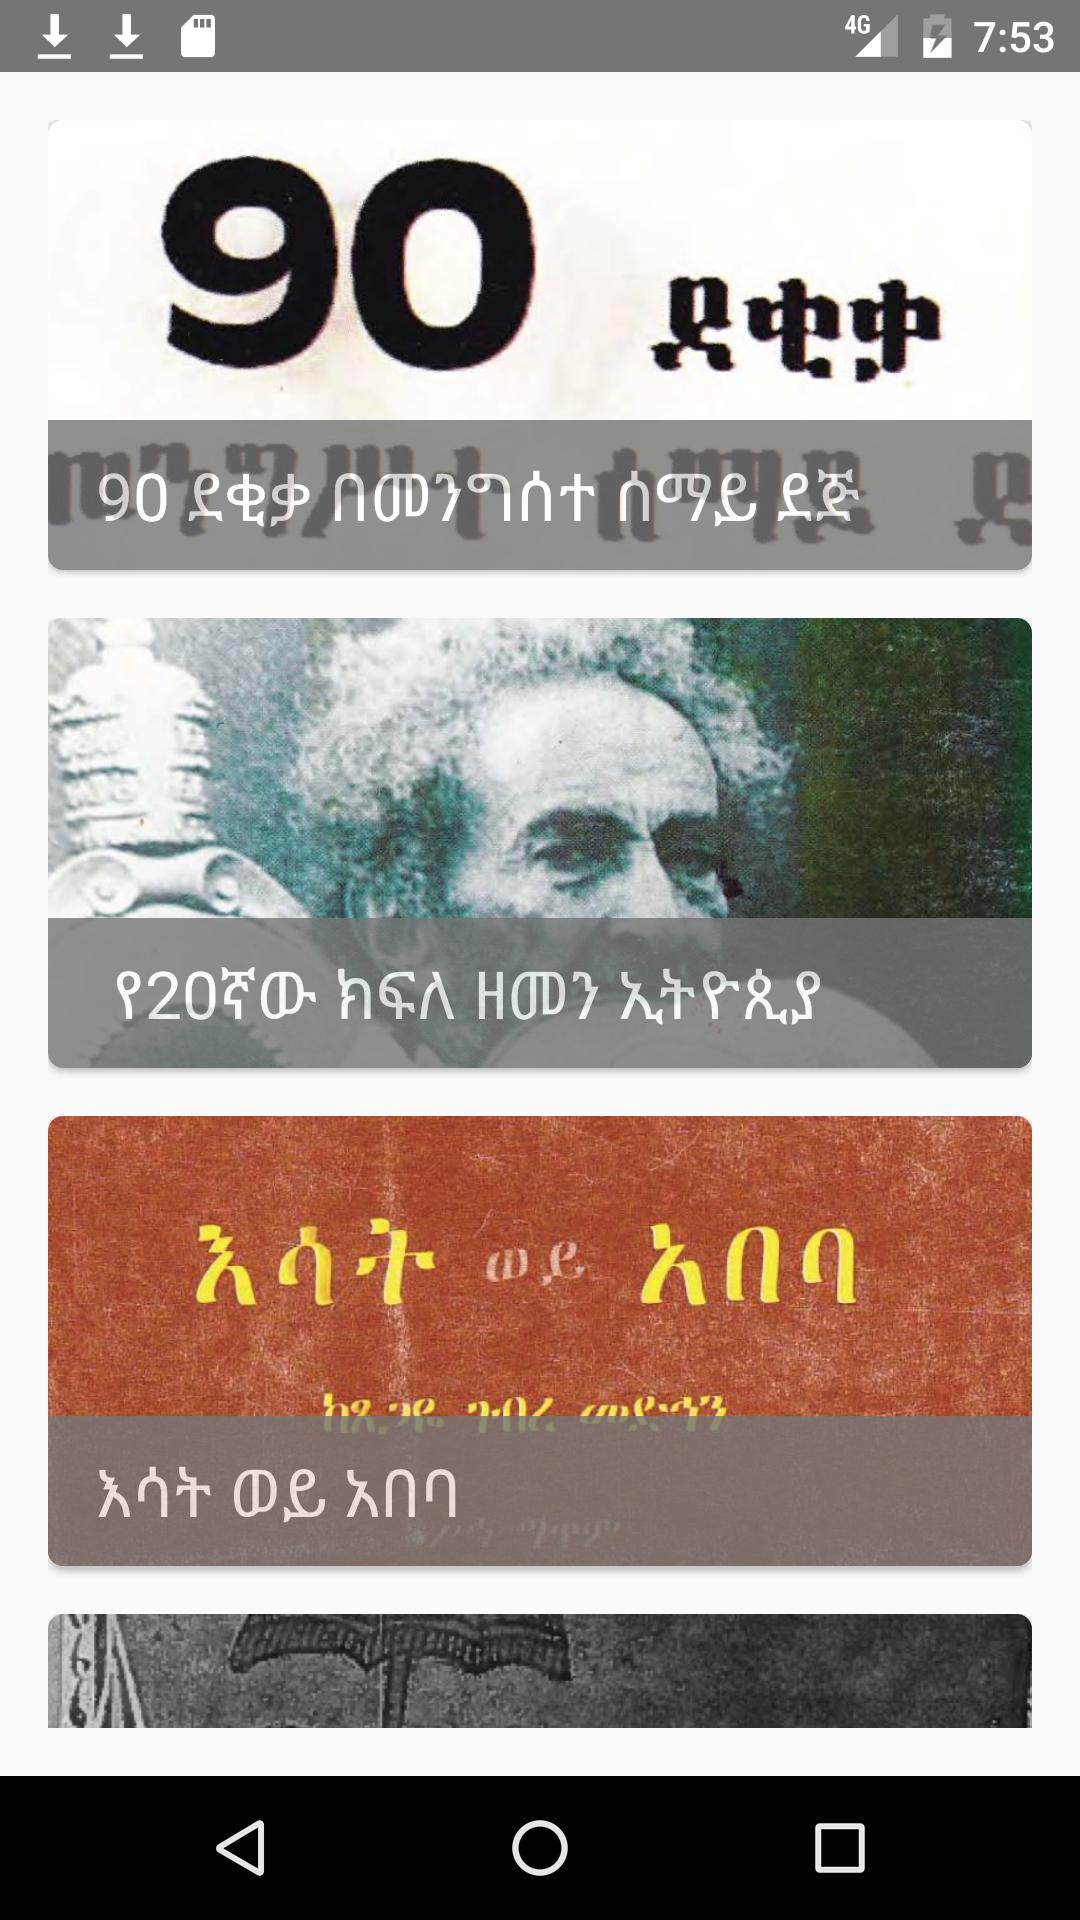 good amharic books pdf free download